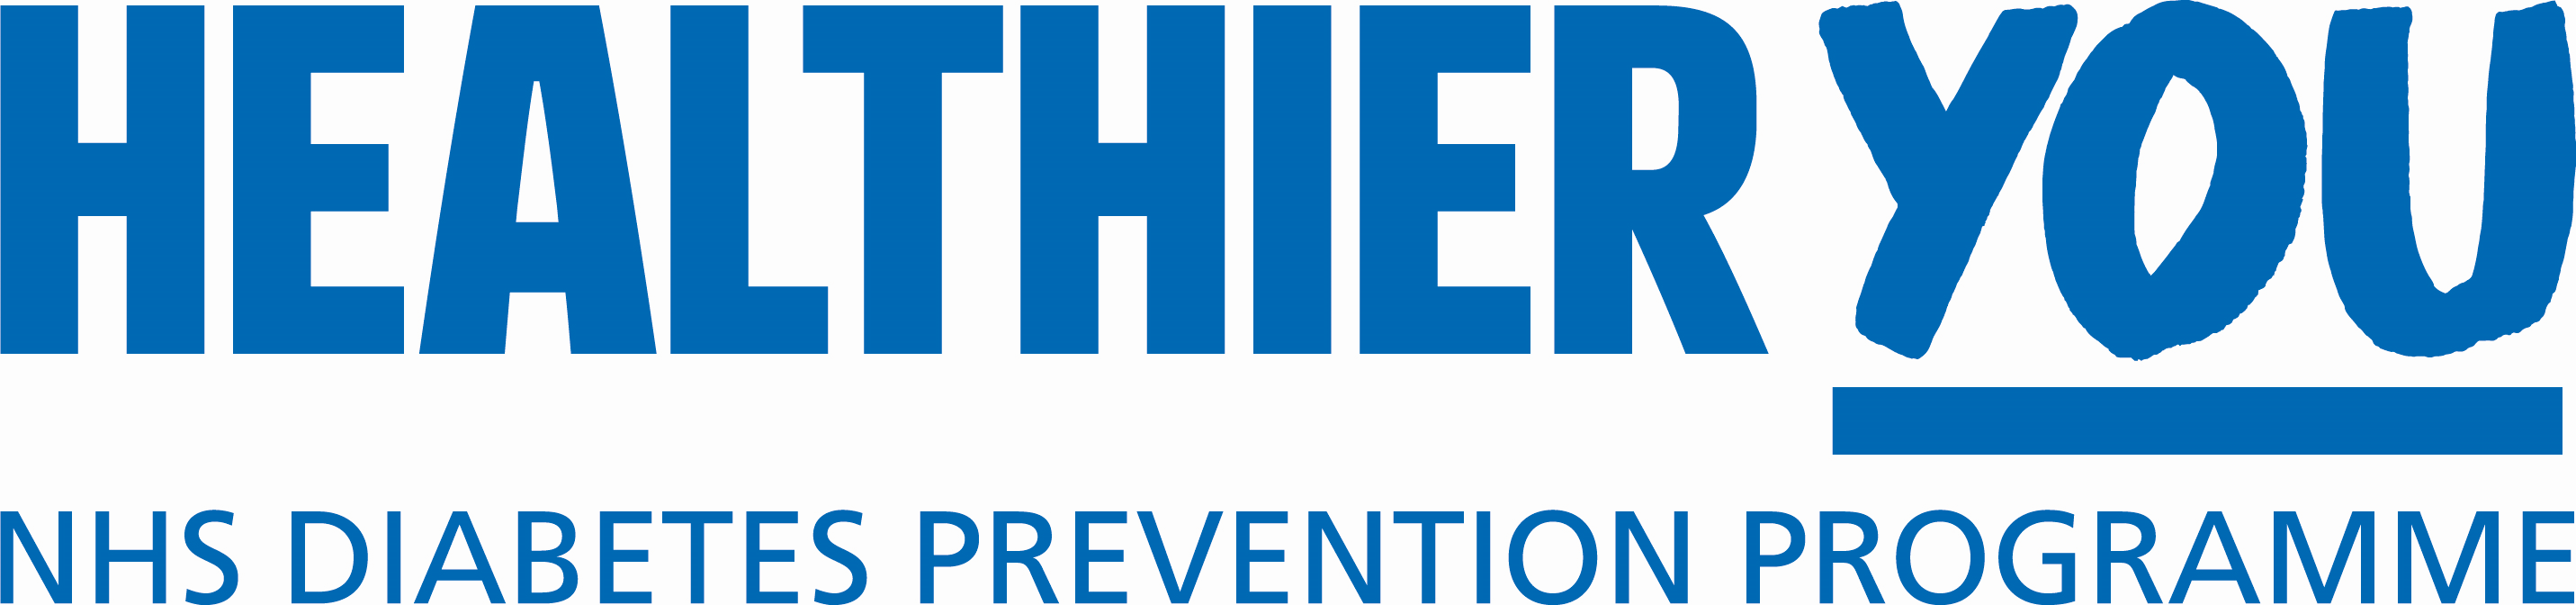 The Healthier You NHS Diabetes Prevention Programme Logo